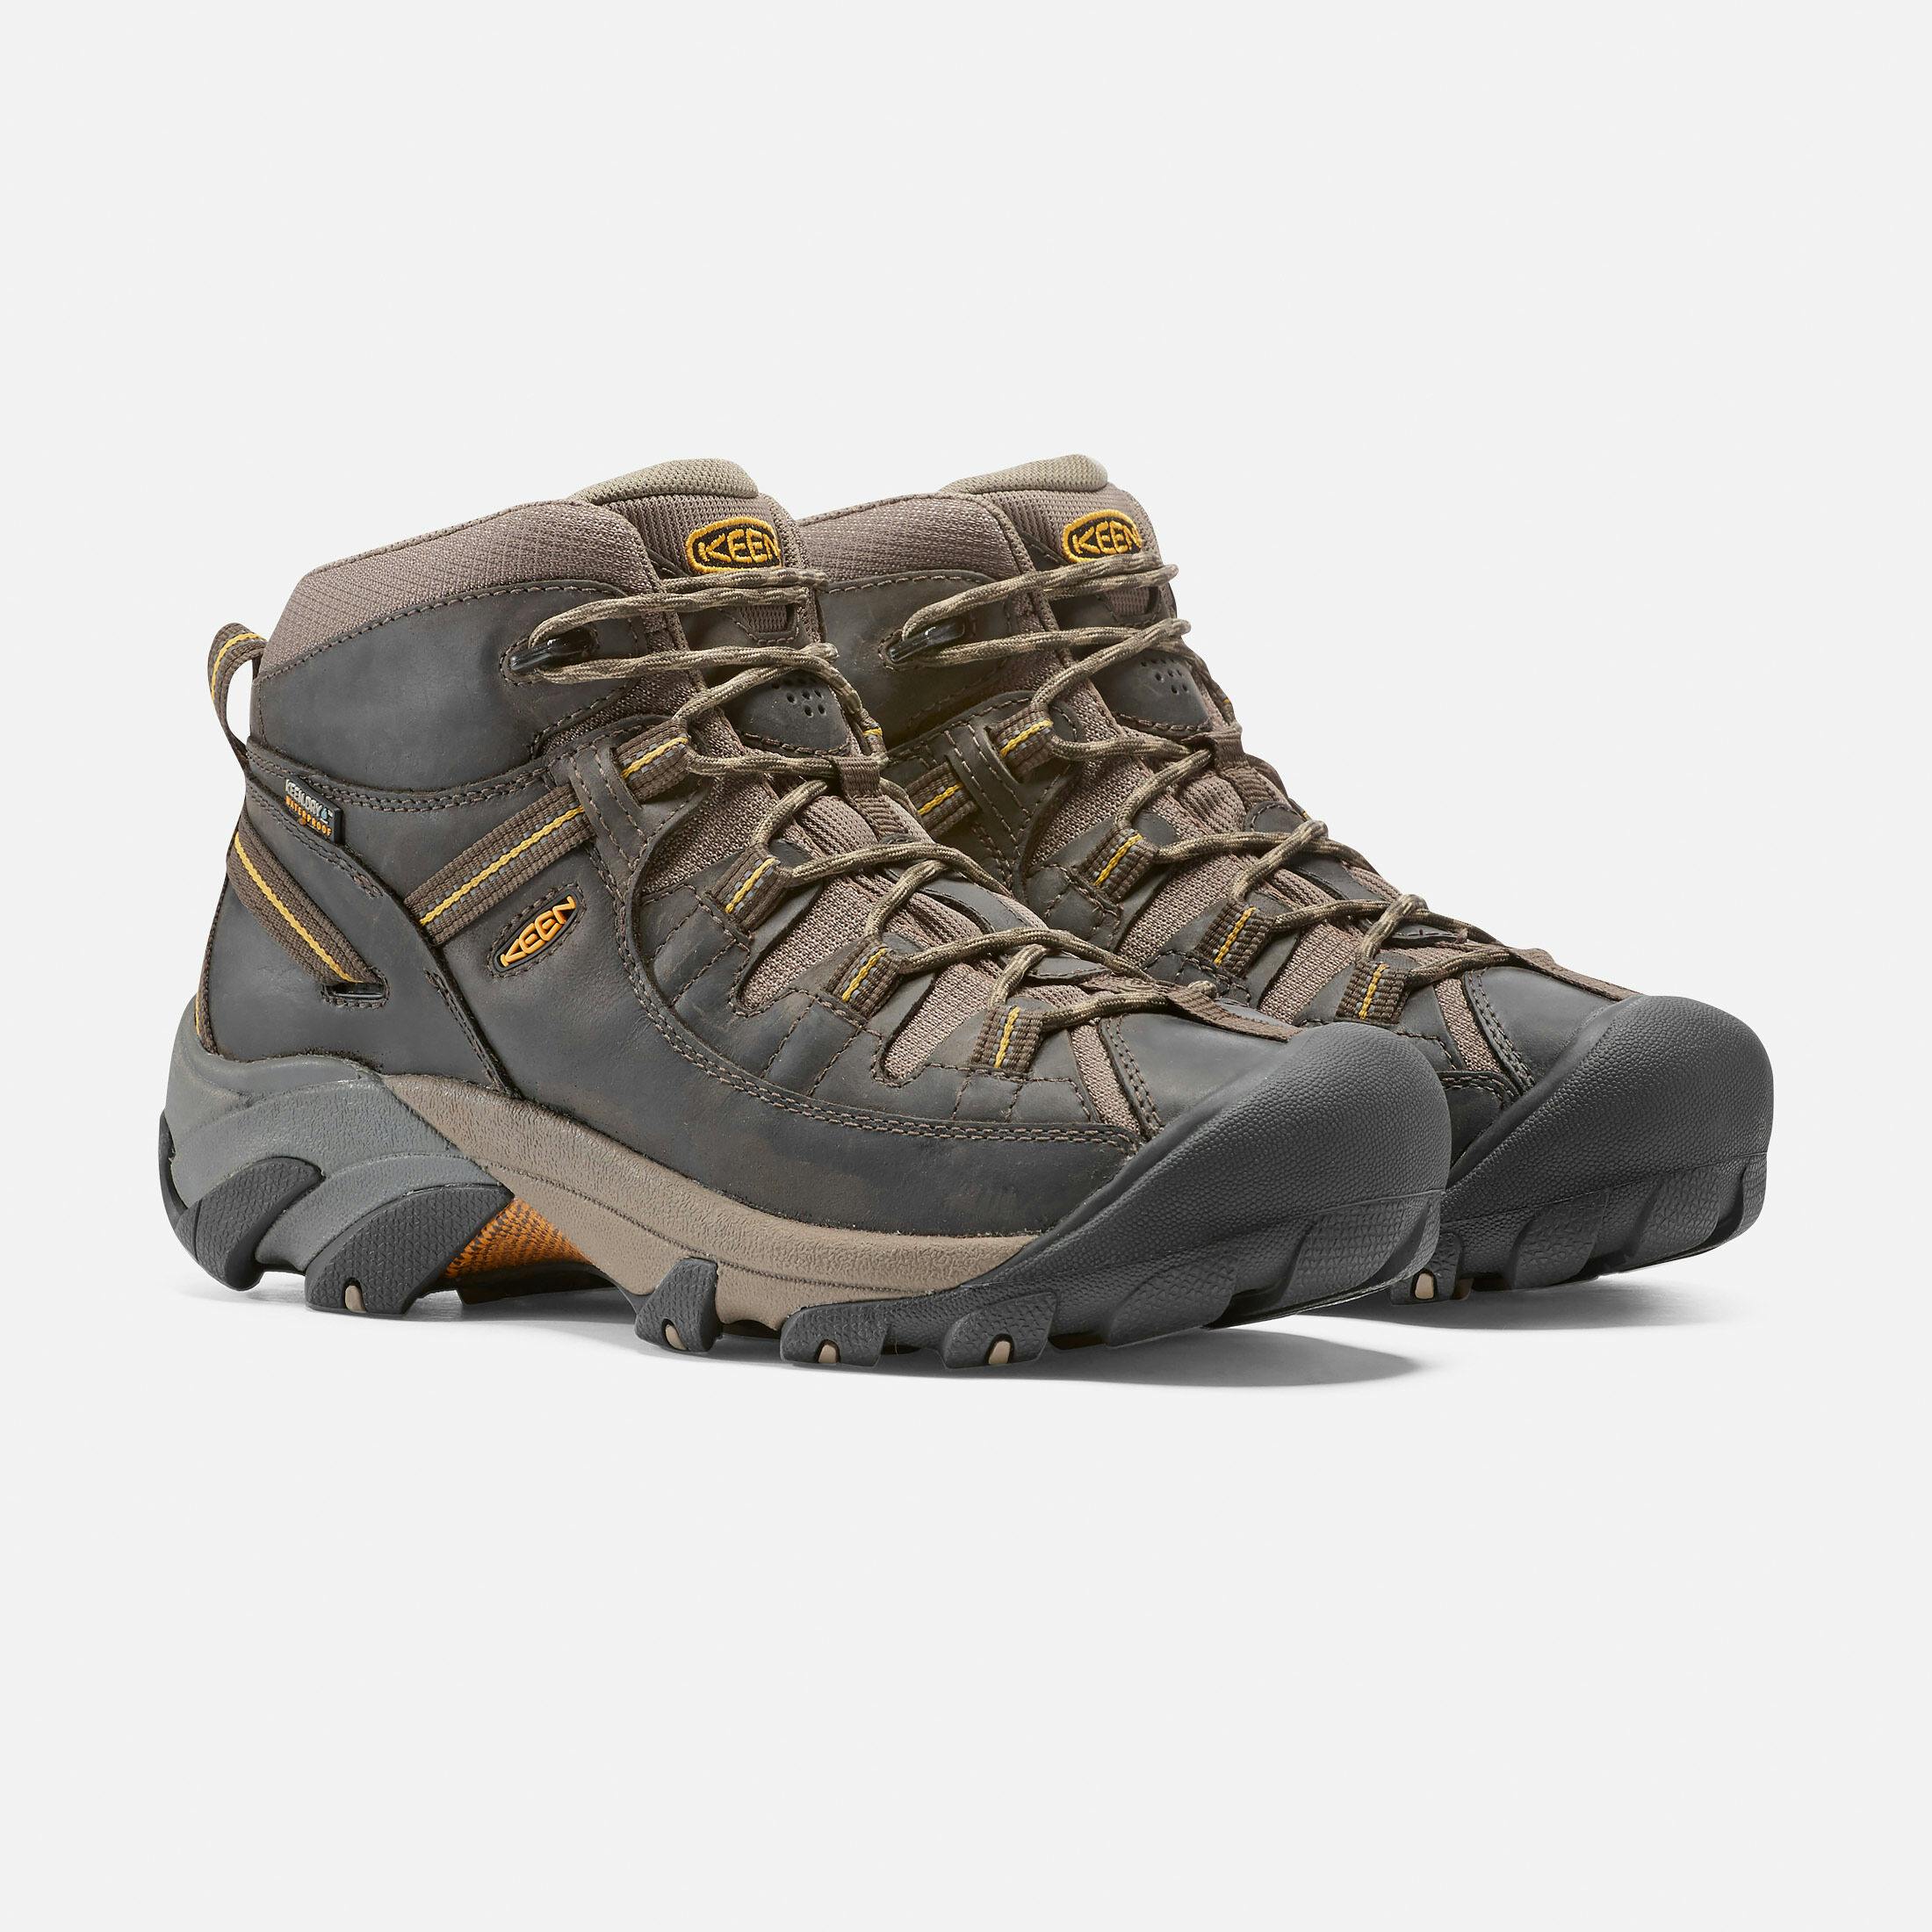 KEEN Men's Targhee II Waterproof Mid Hiking Boots